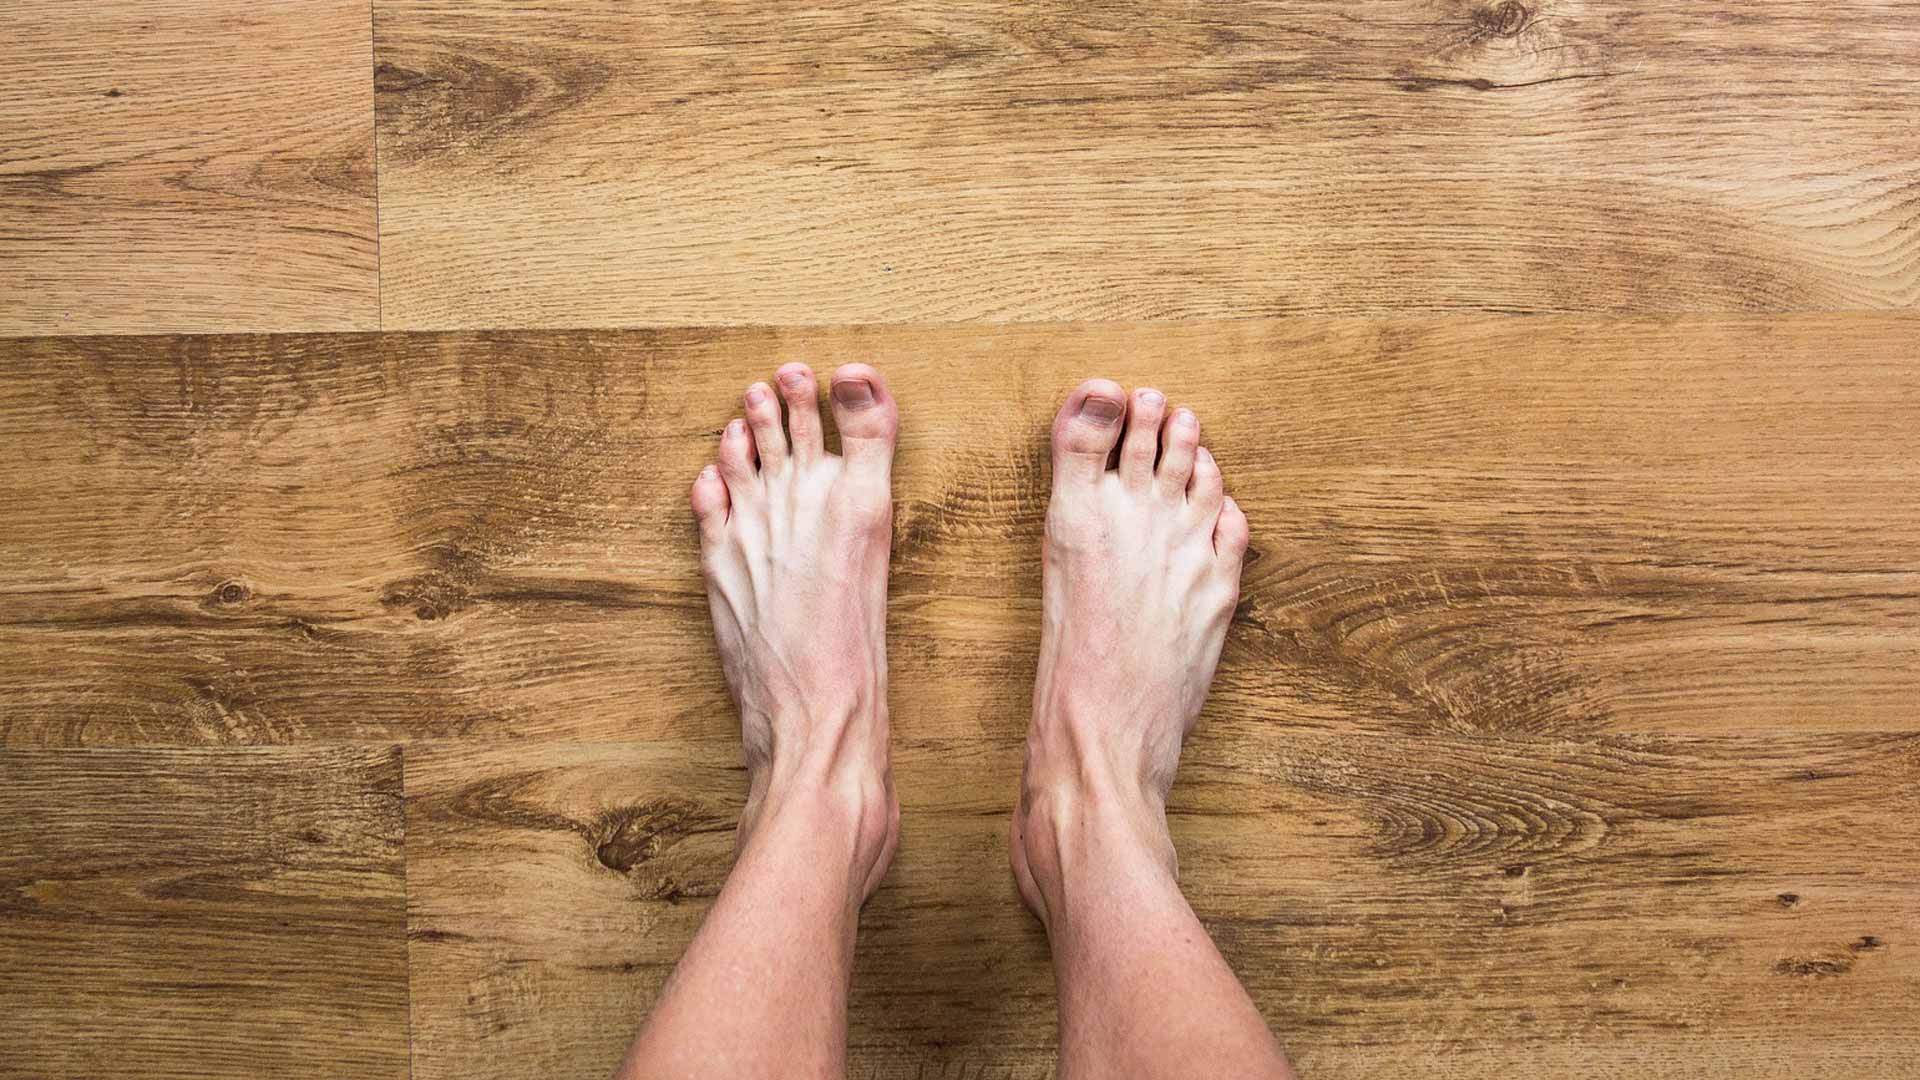 Keeping Your Feet Healthy